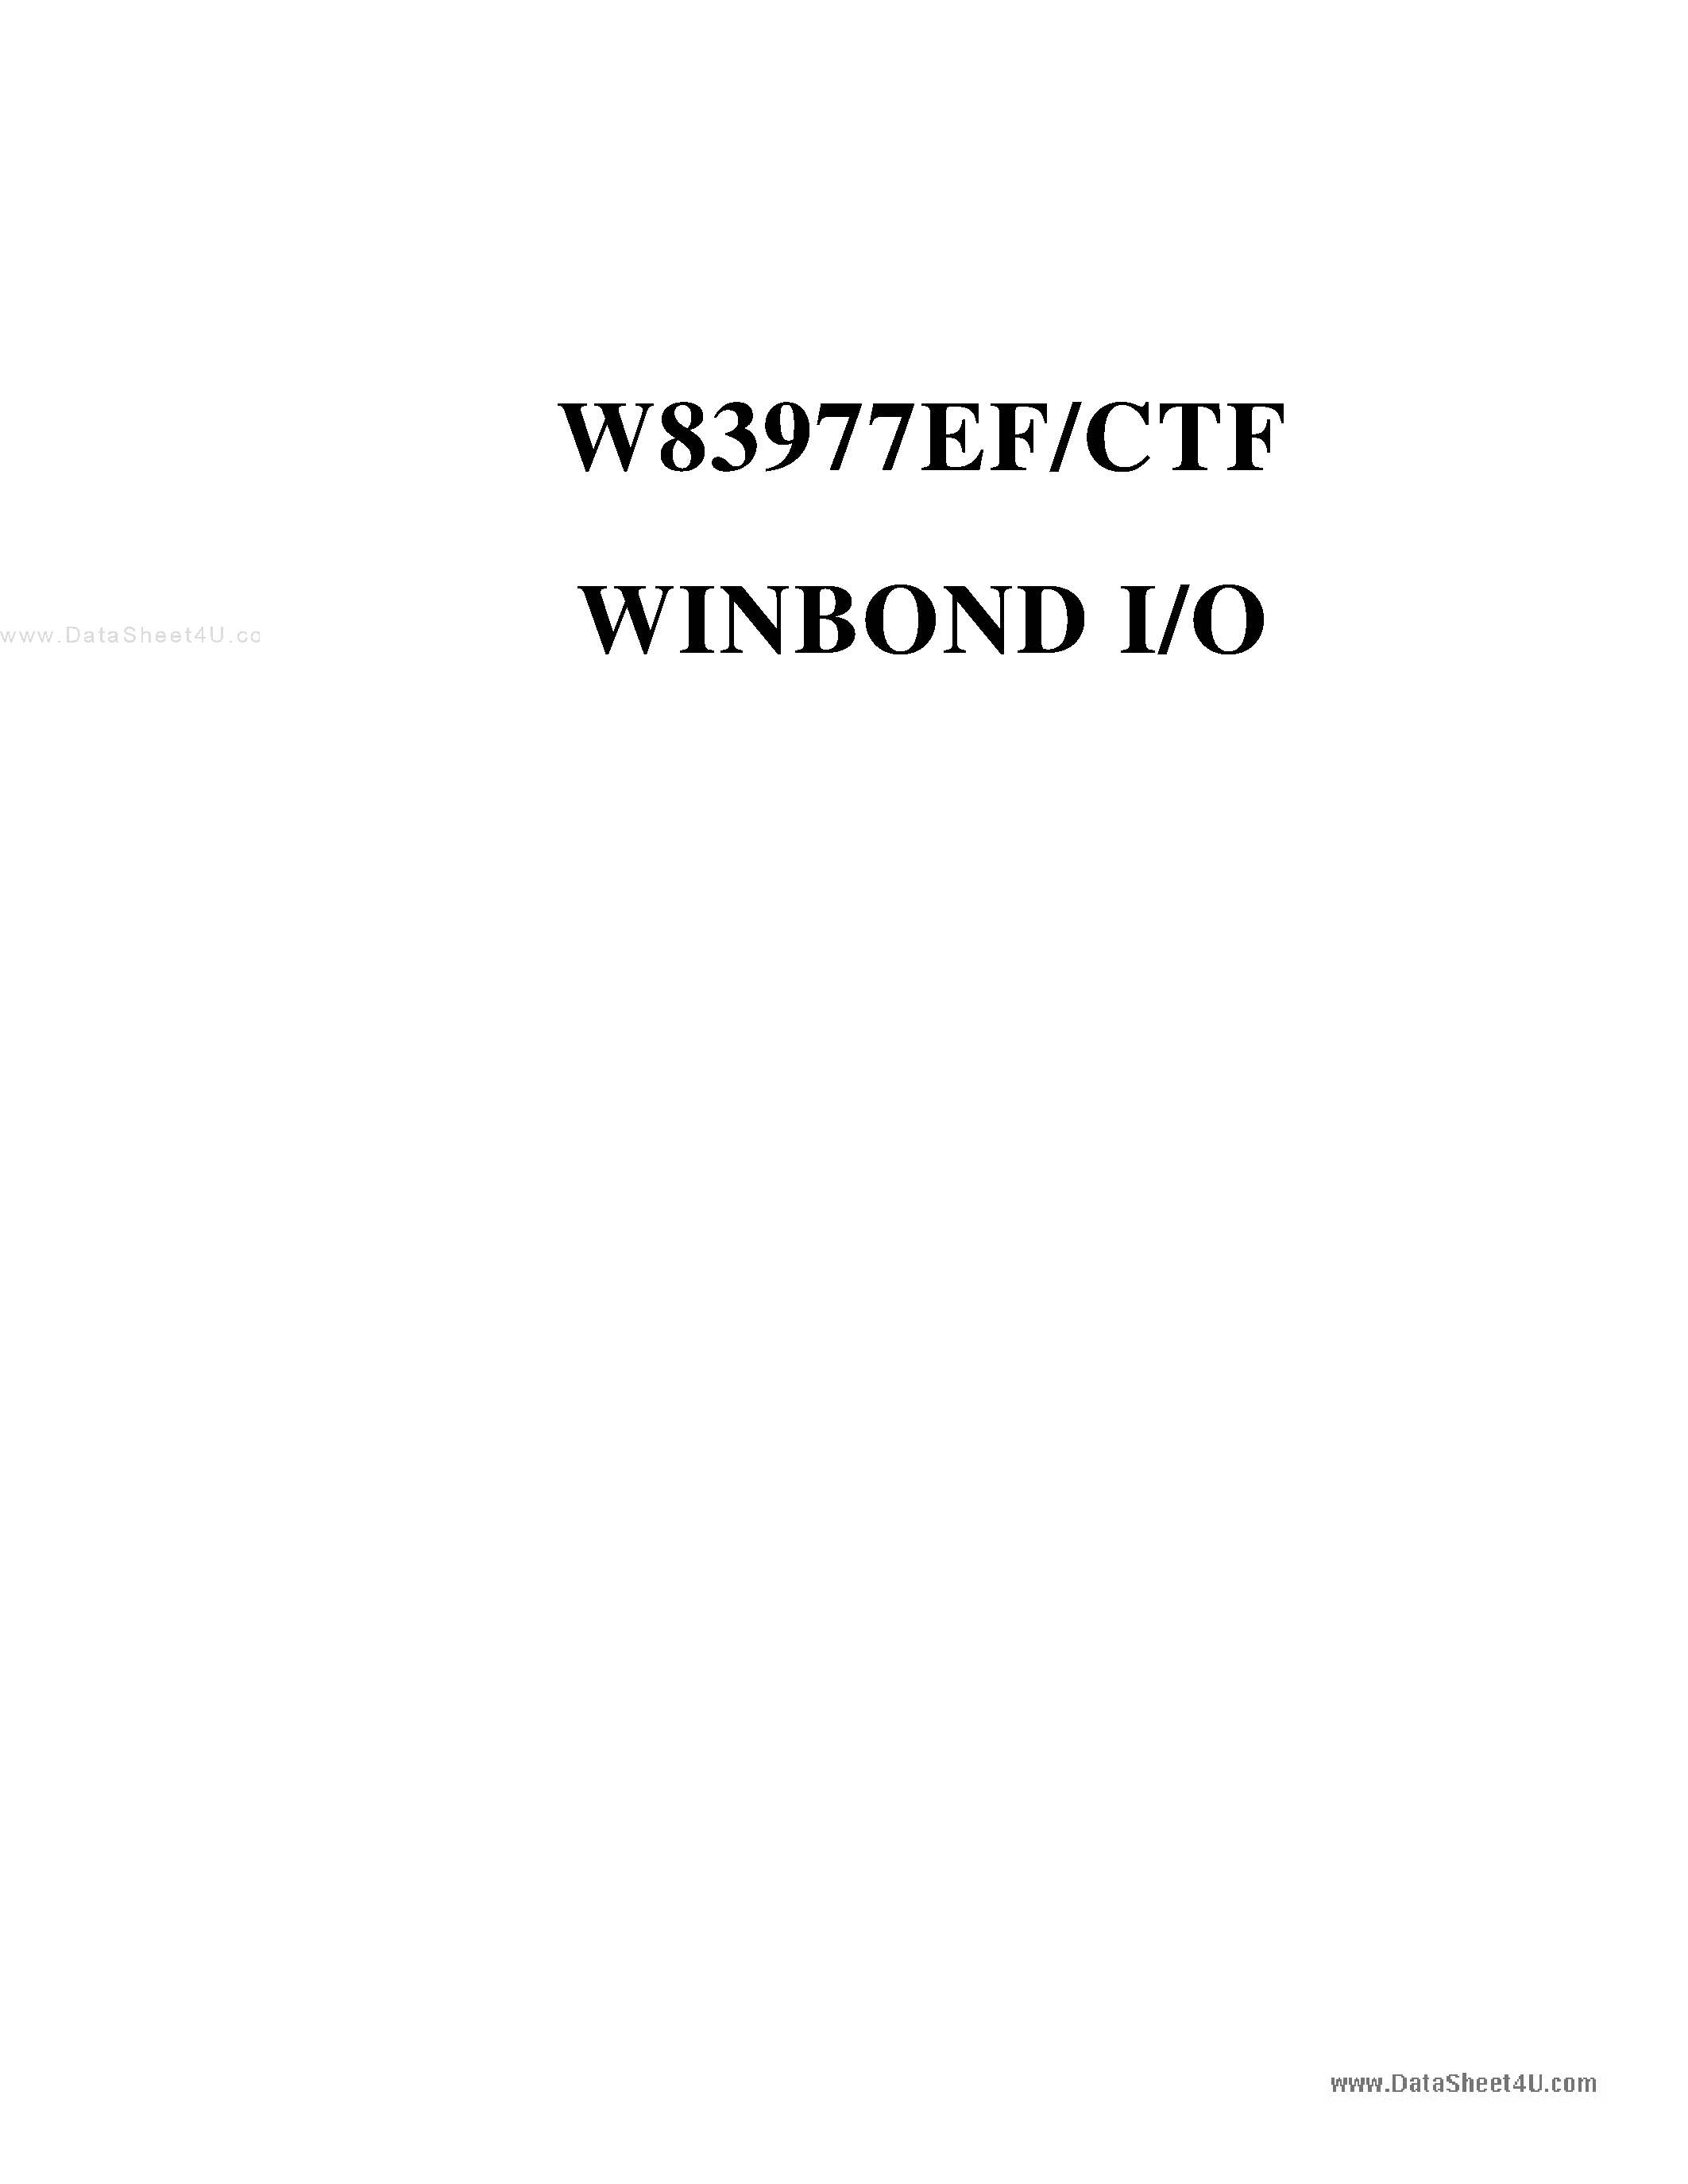 Datasheet W83977CTF - WINBOND I/O page 1